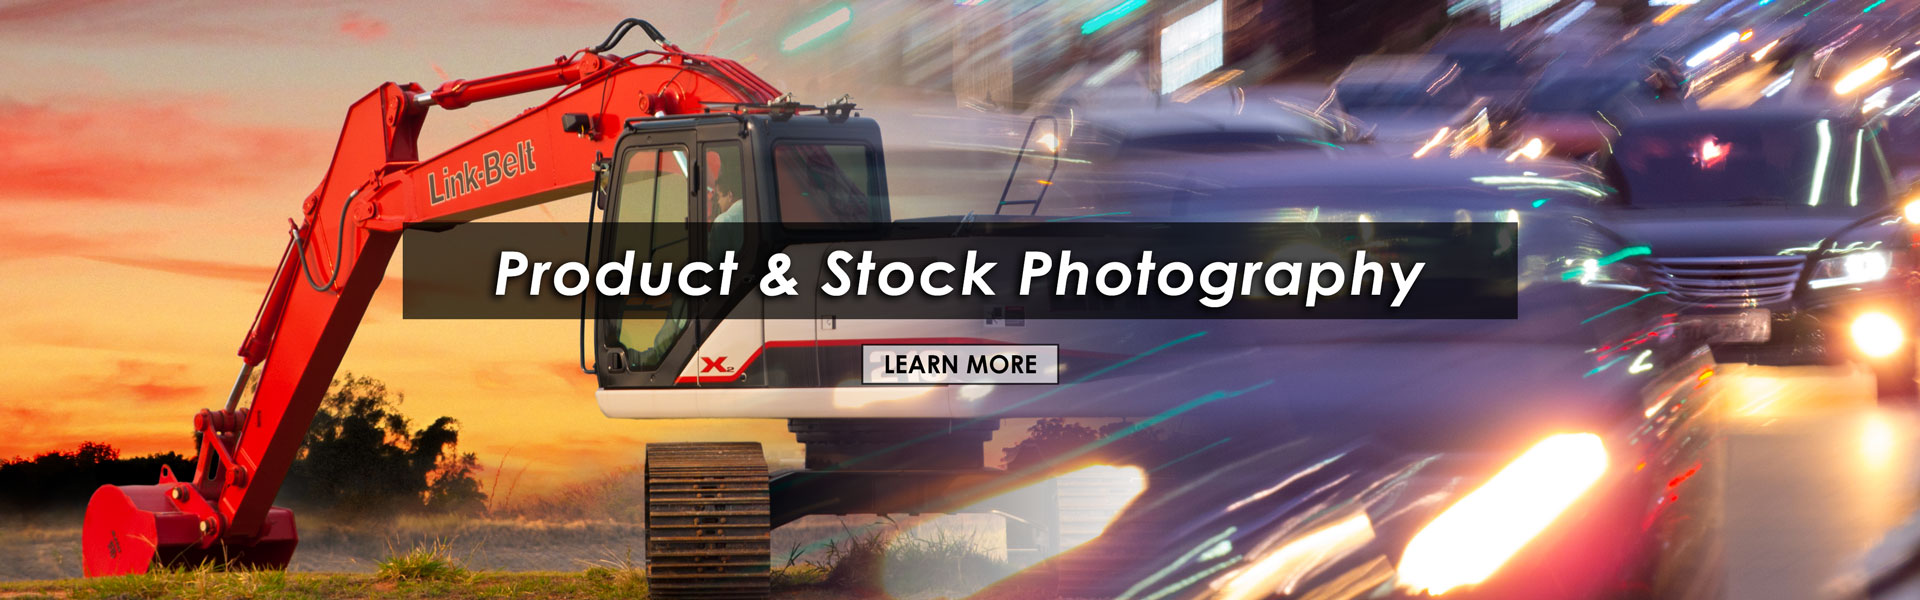 Inpix Product & Stock Photography